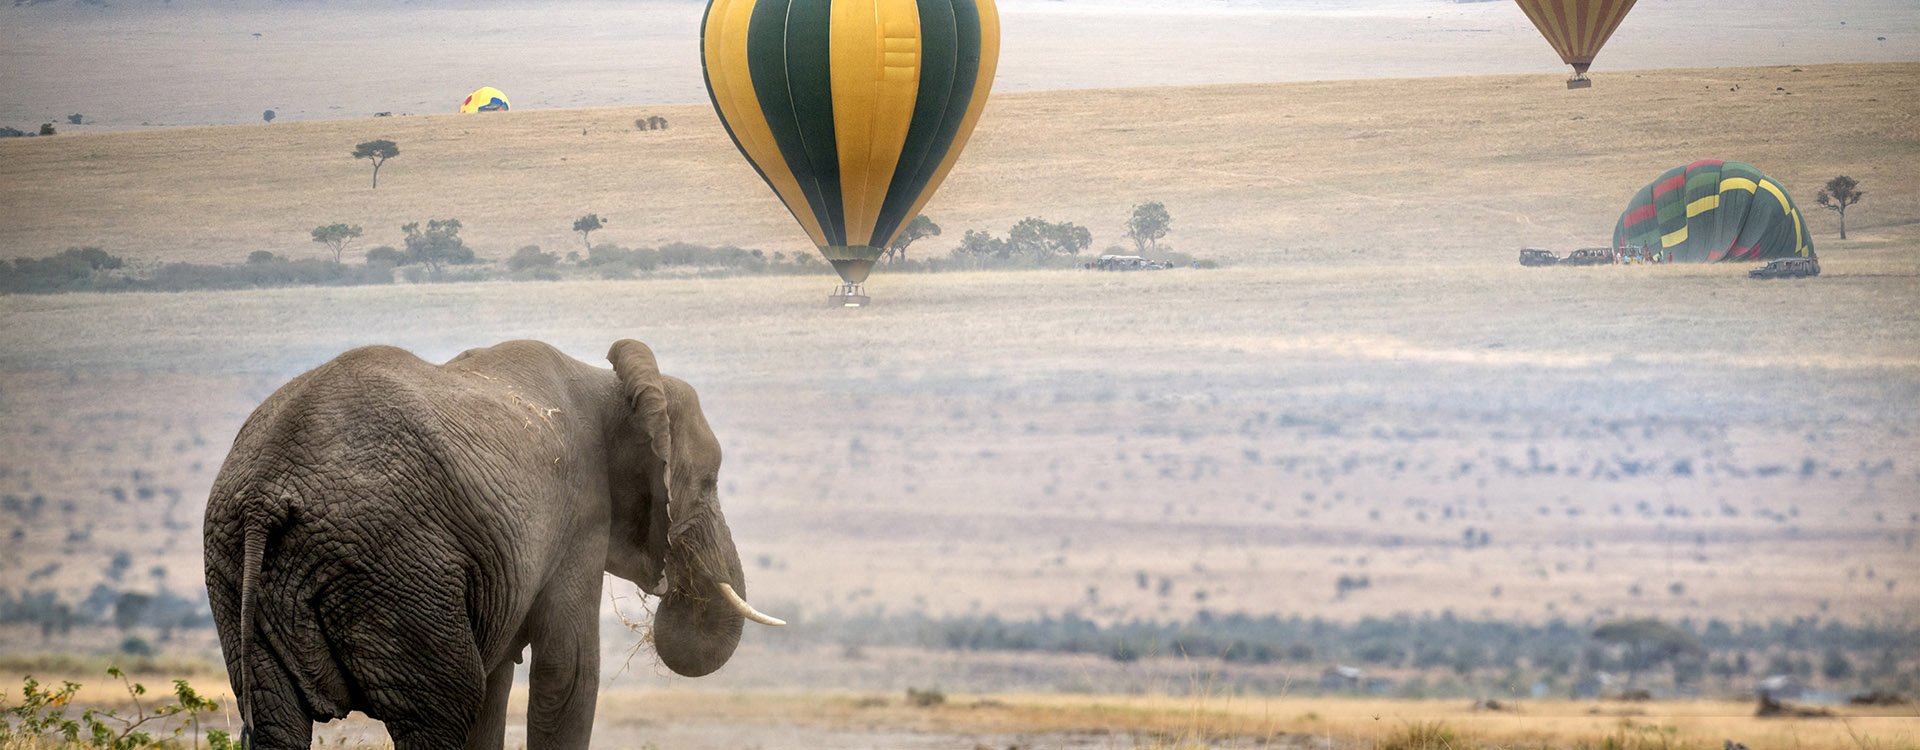 African elephant, hot air balloons landing on background, Masai Mara National Reserve, Kenya